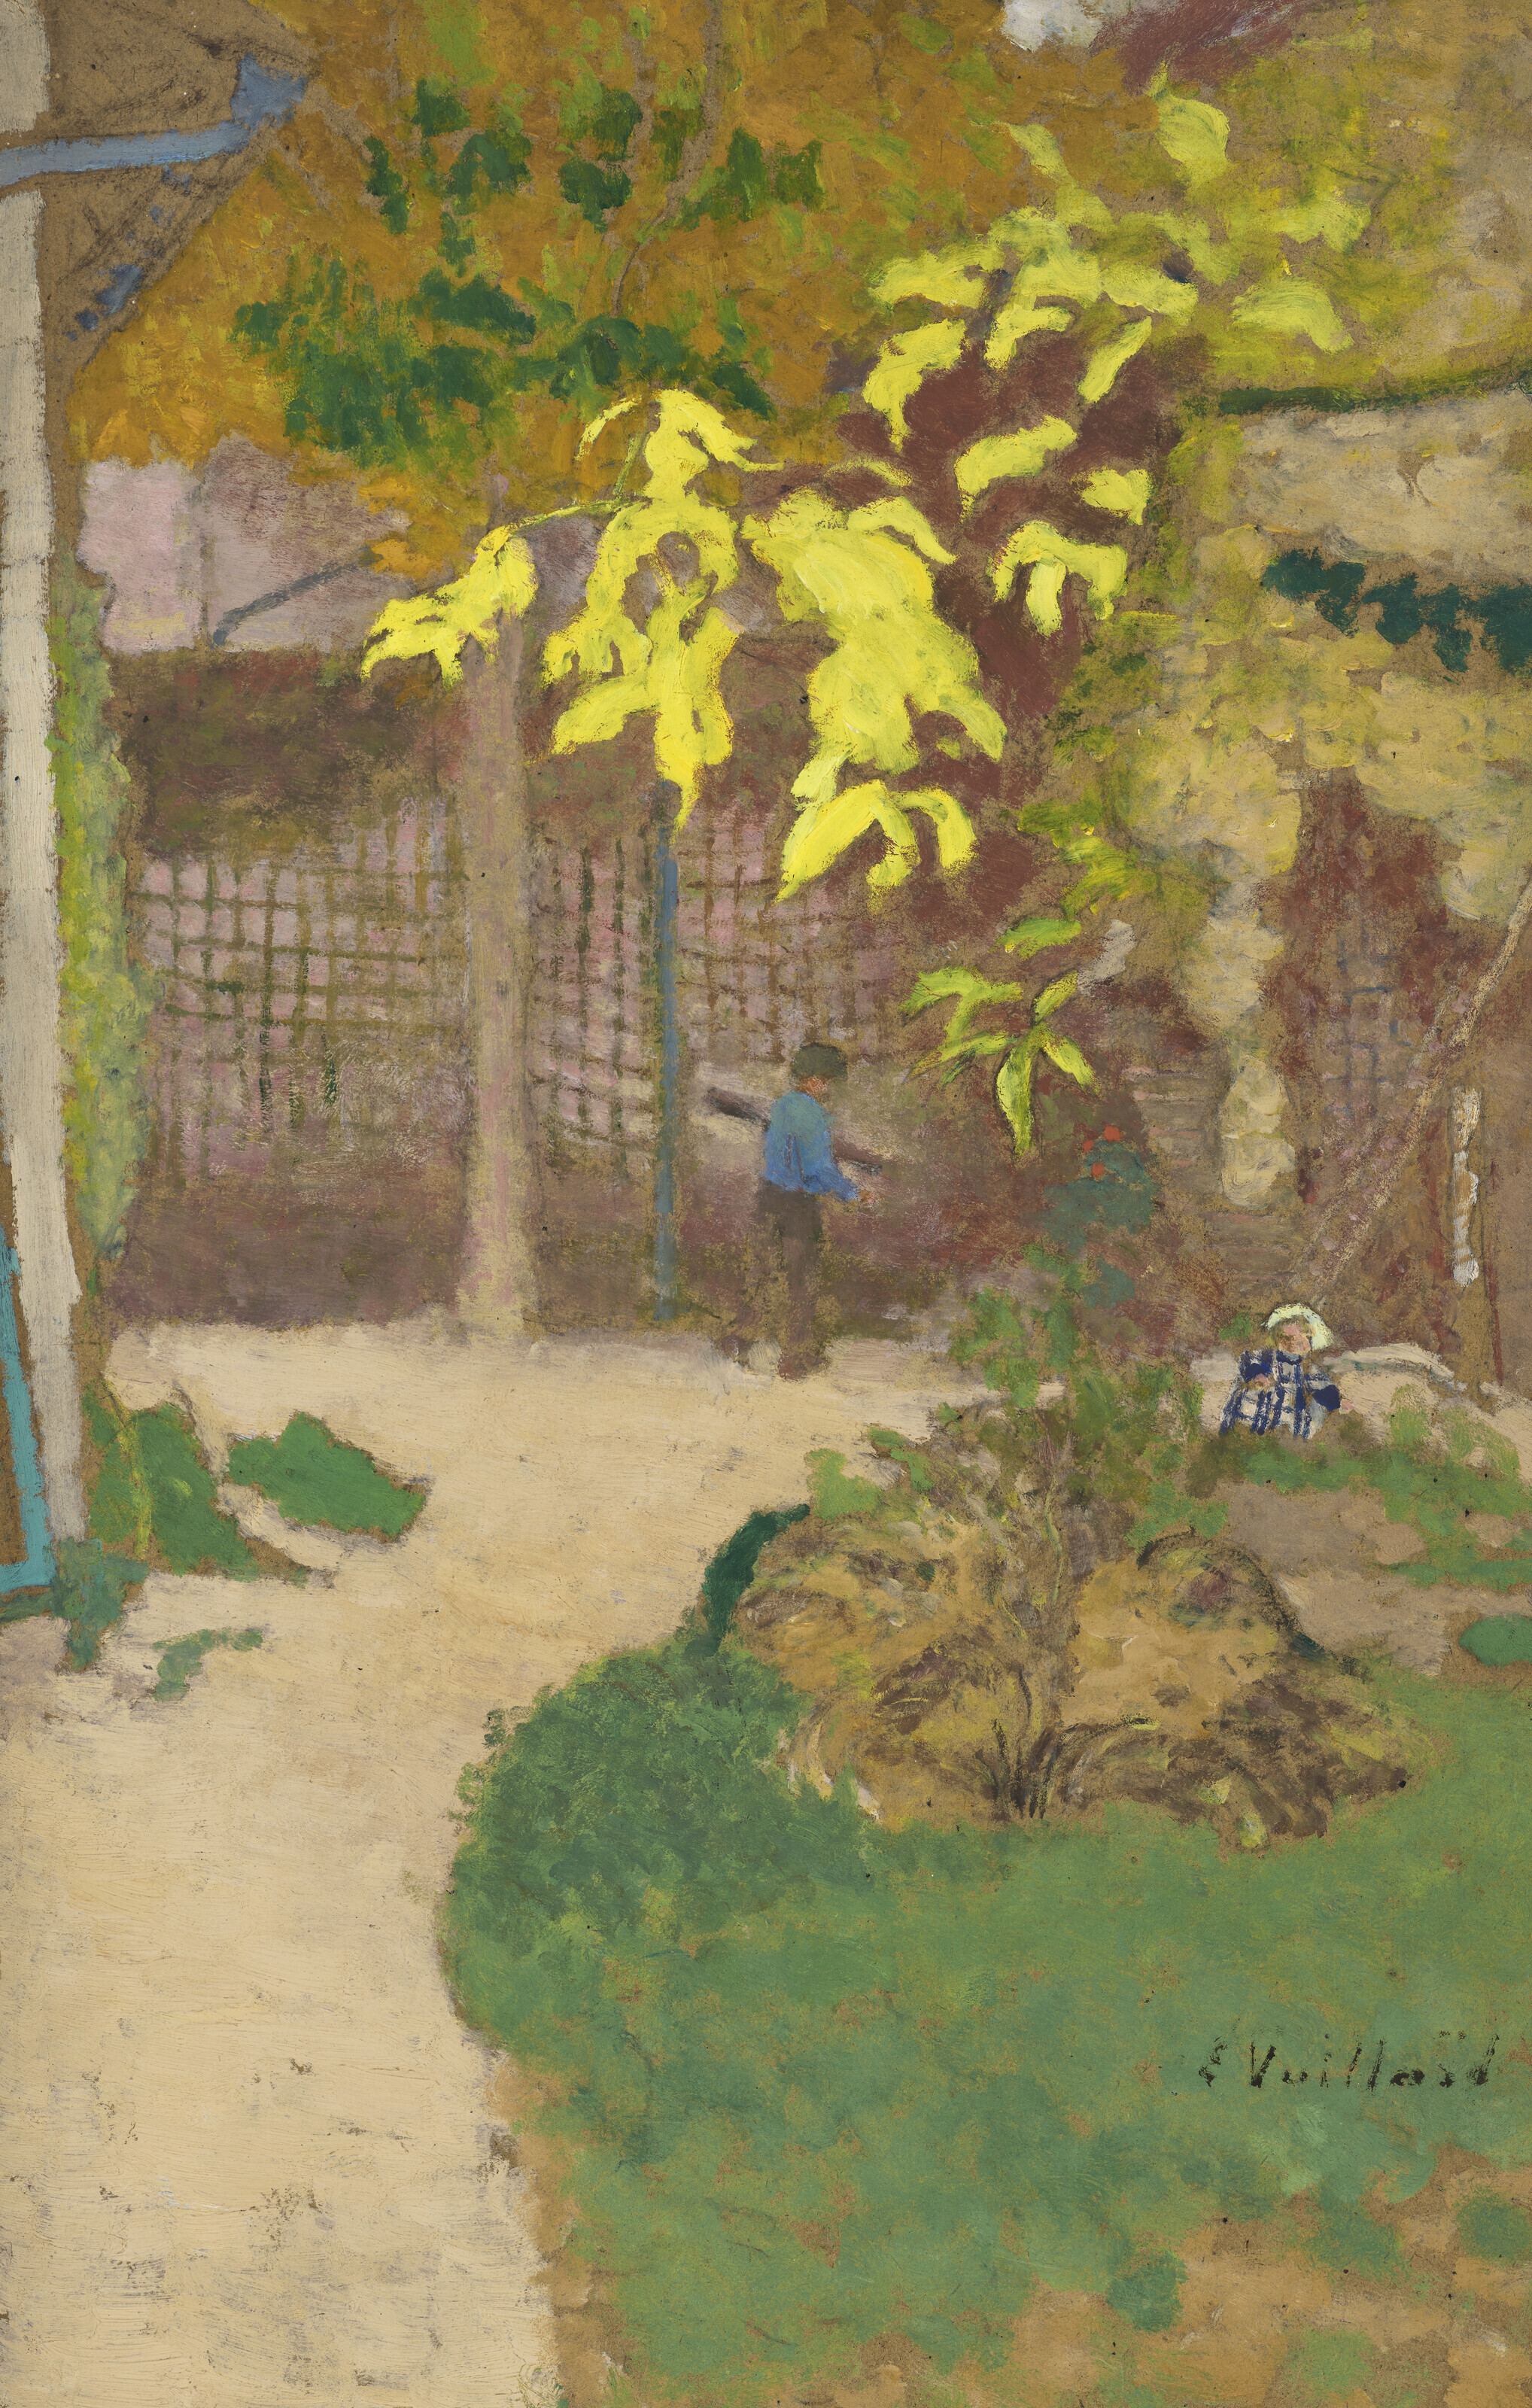 Le Jardin by Édouard Vuillard, circa 1900